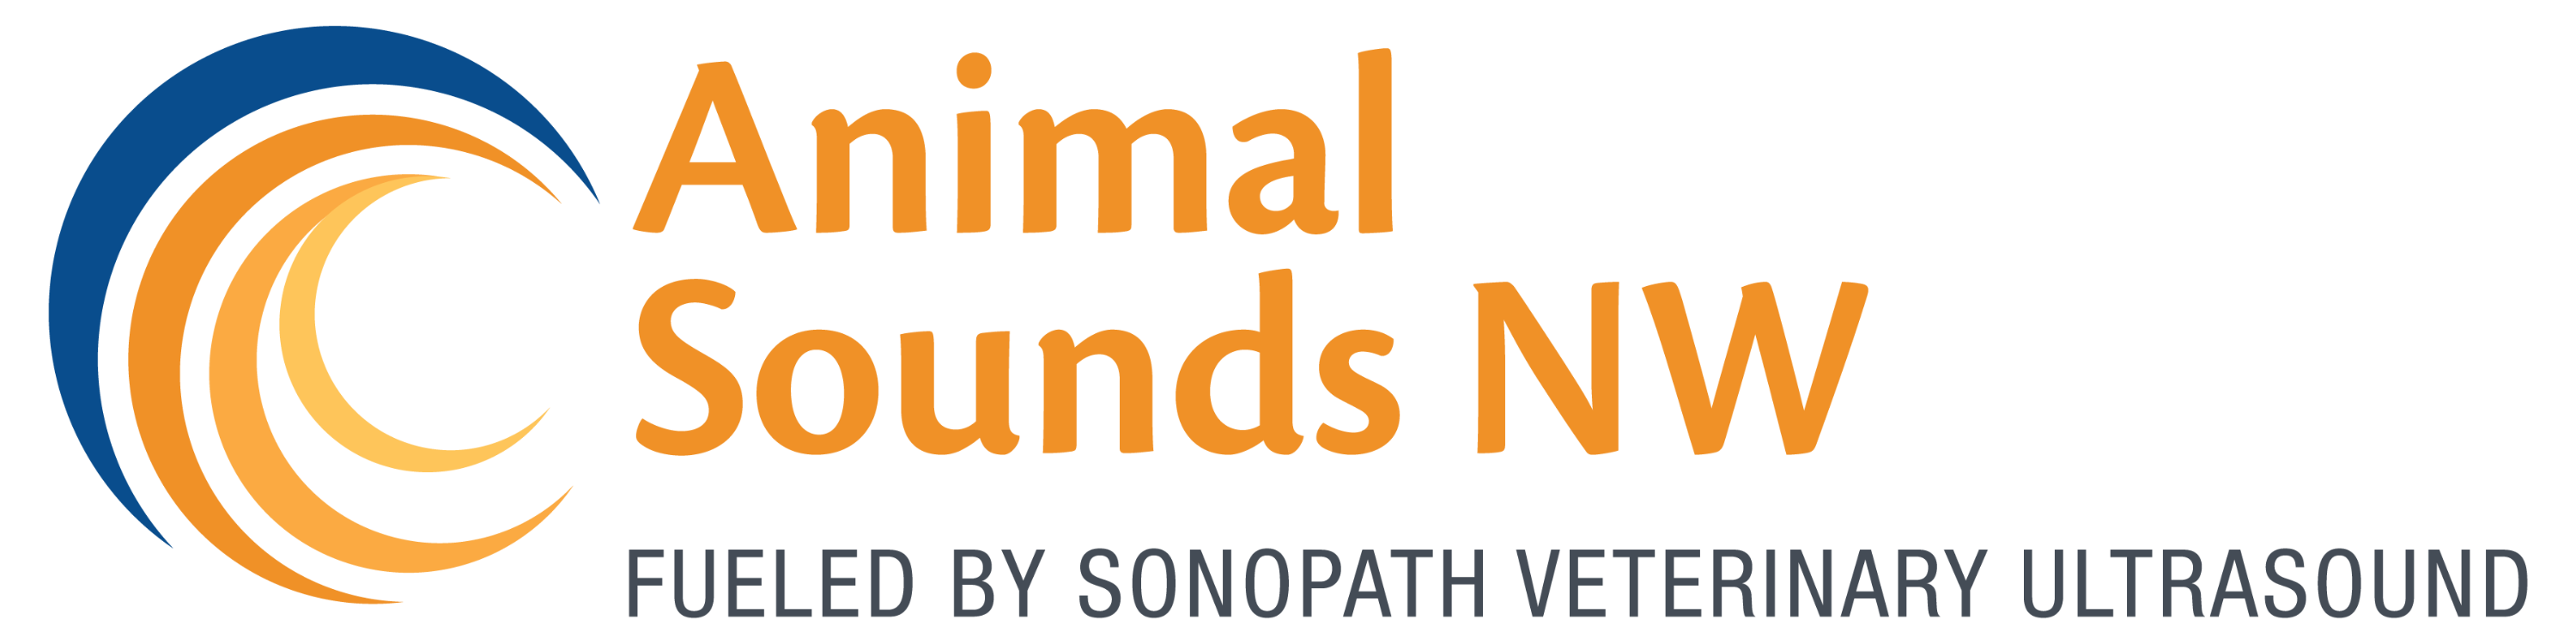 Animal Sounds NW, LLC